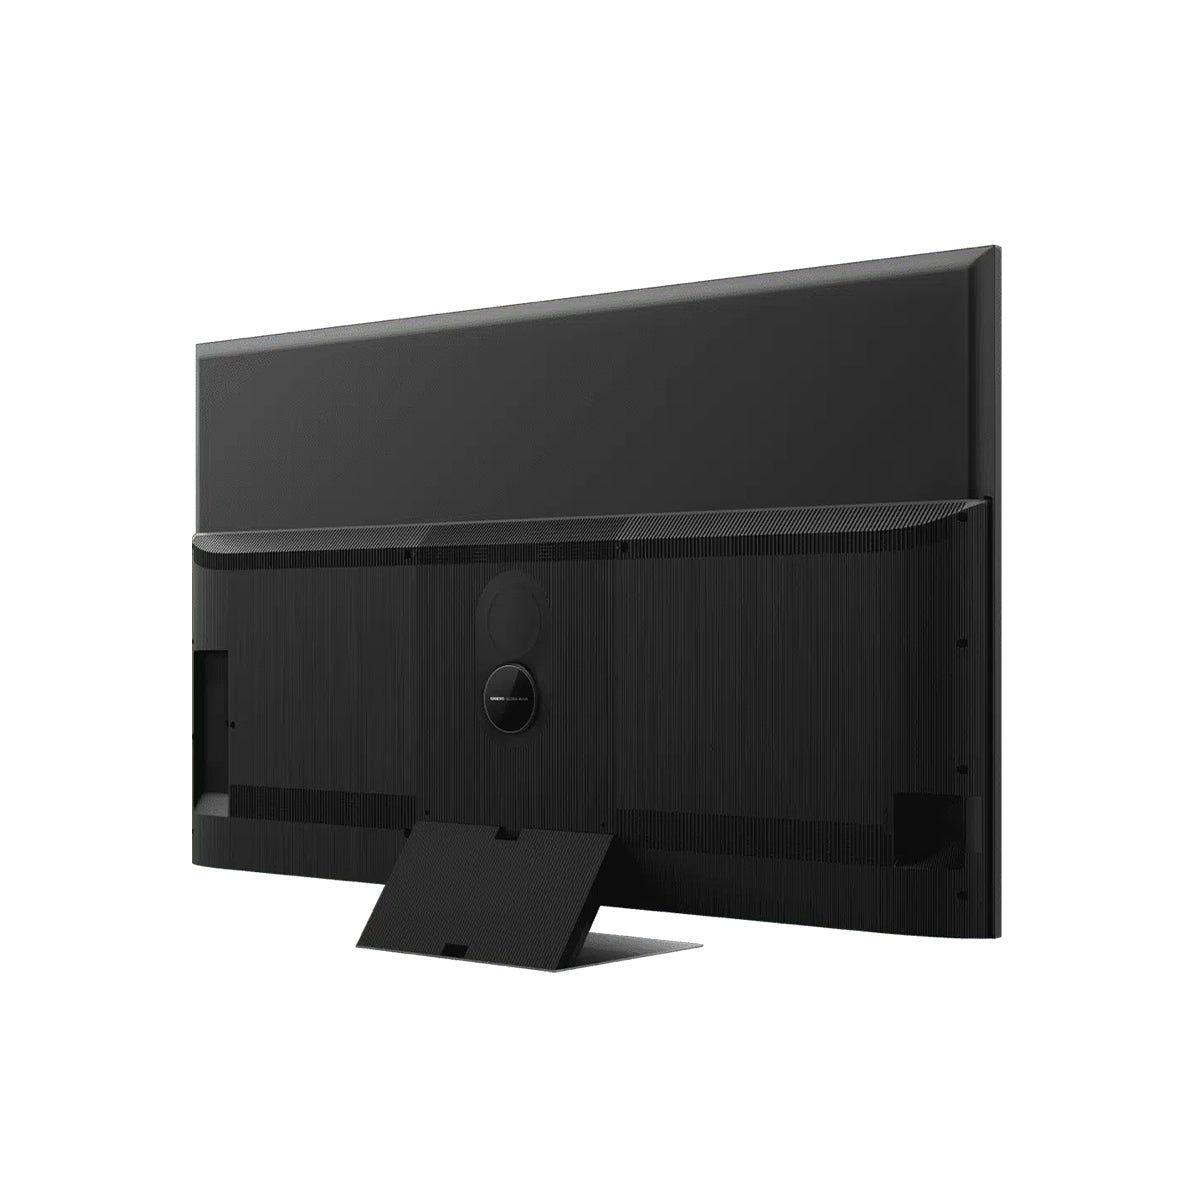 Grab a 75-inch TCL C845 Mini LED TV for less than $2,000